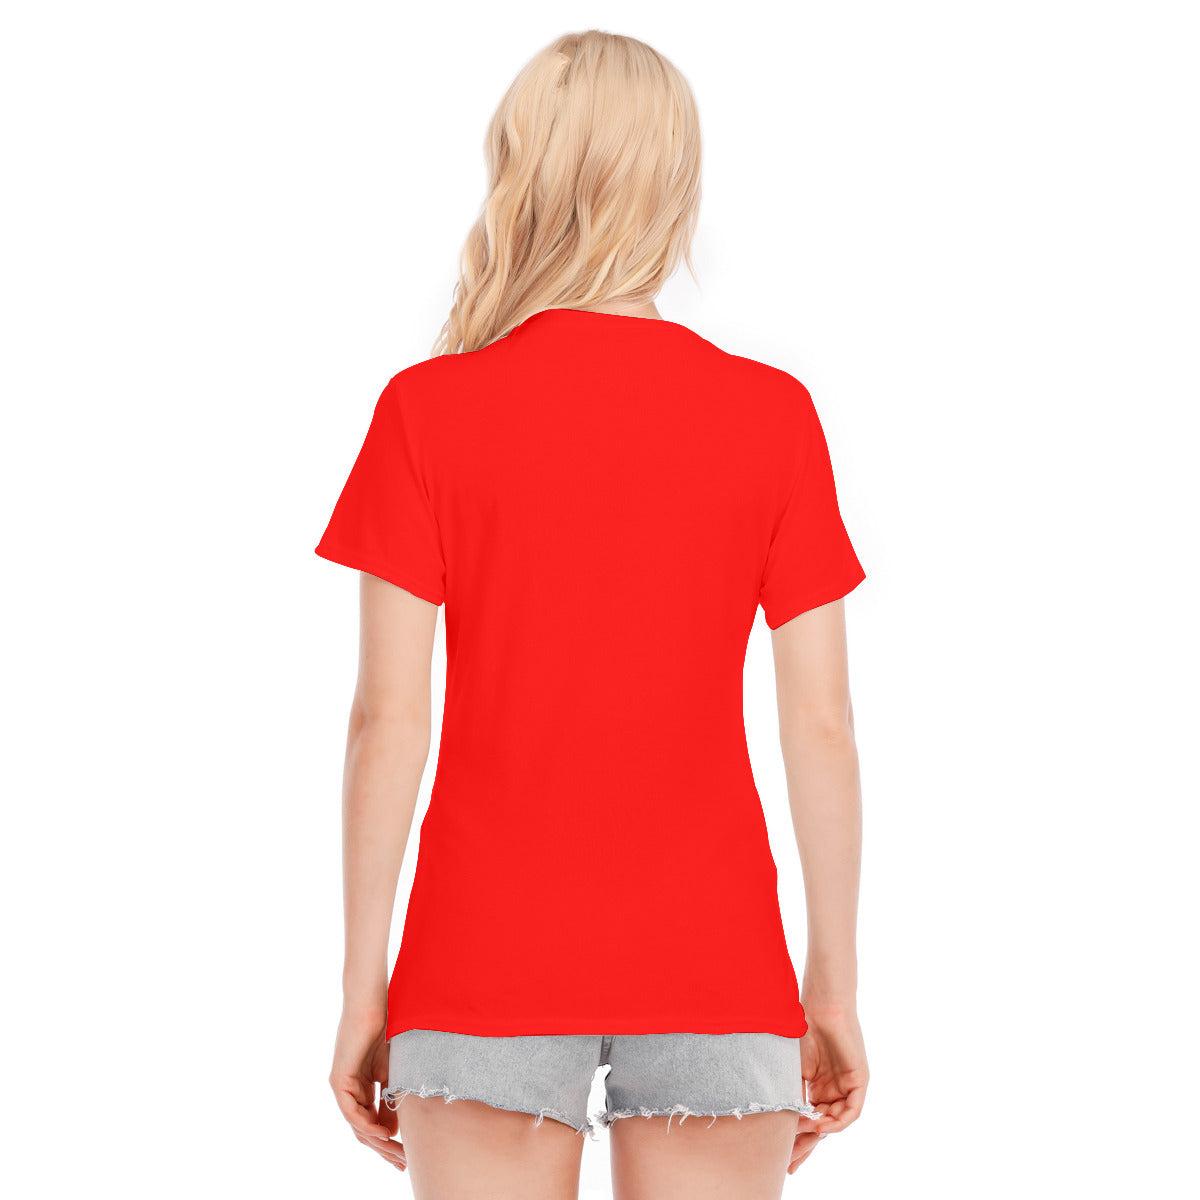 Fantasy Fox 101 -- Unisex O-neck Short Sleeve T-shirt